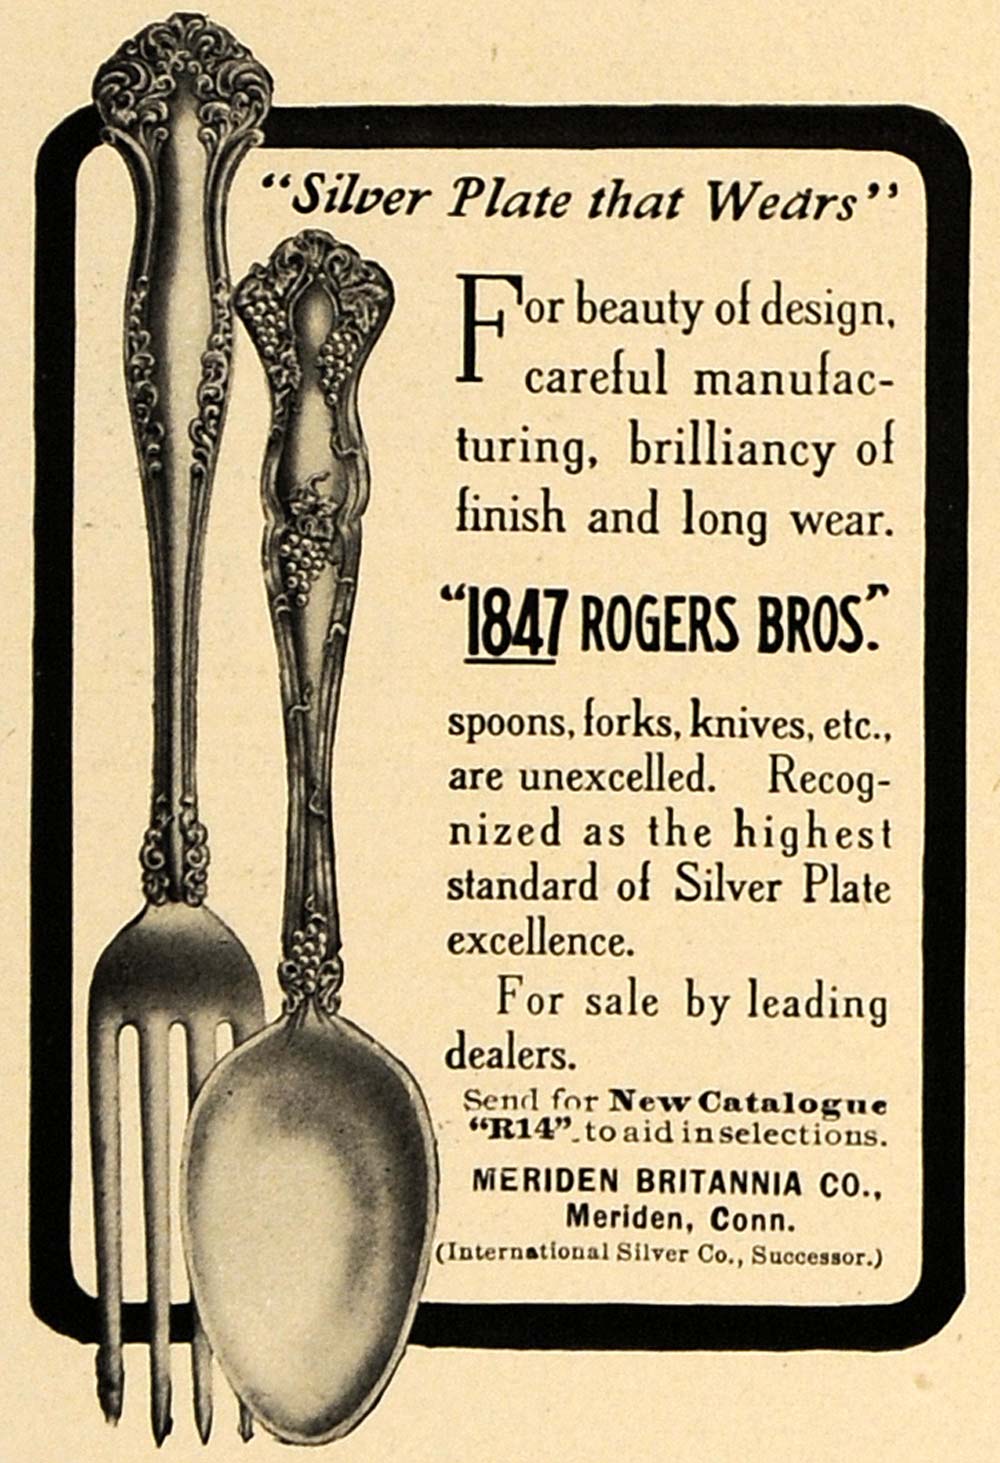 1906 Ad 1847 Rogers Bros Silverware Meriden Britannia - ORIGINAL ADVERTISING CL8